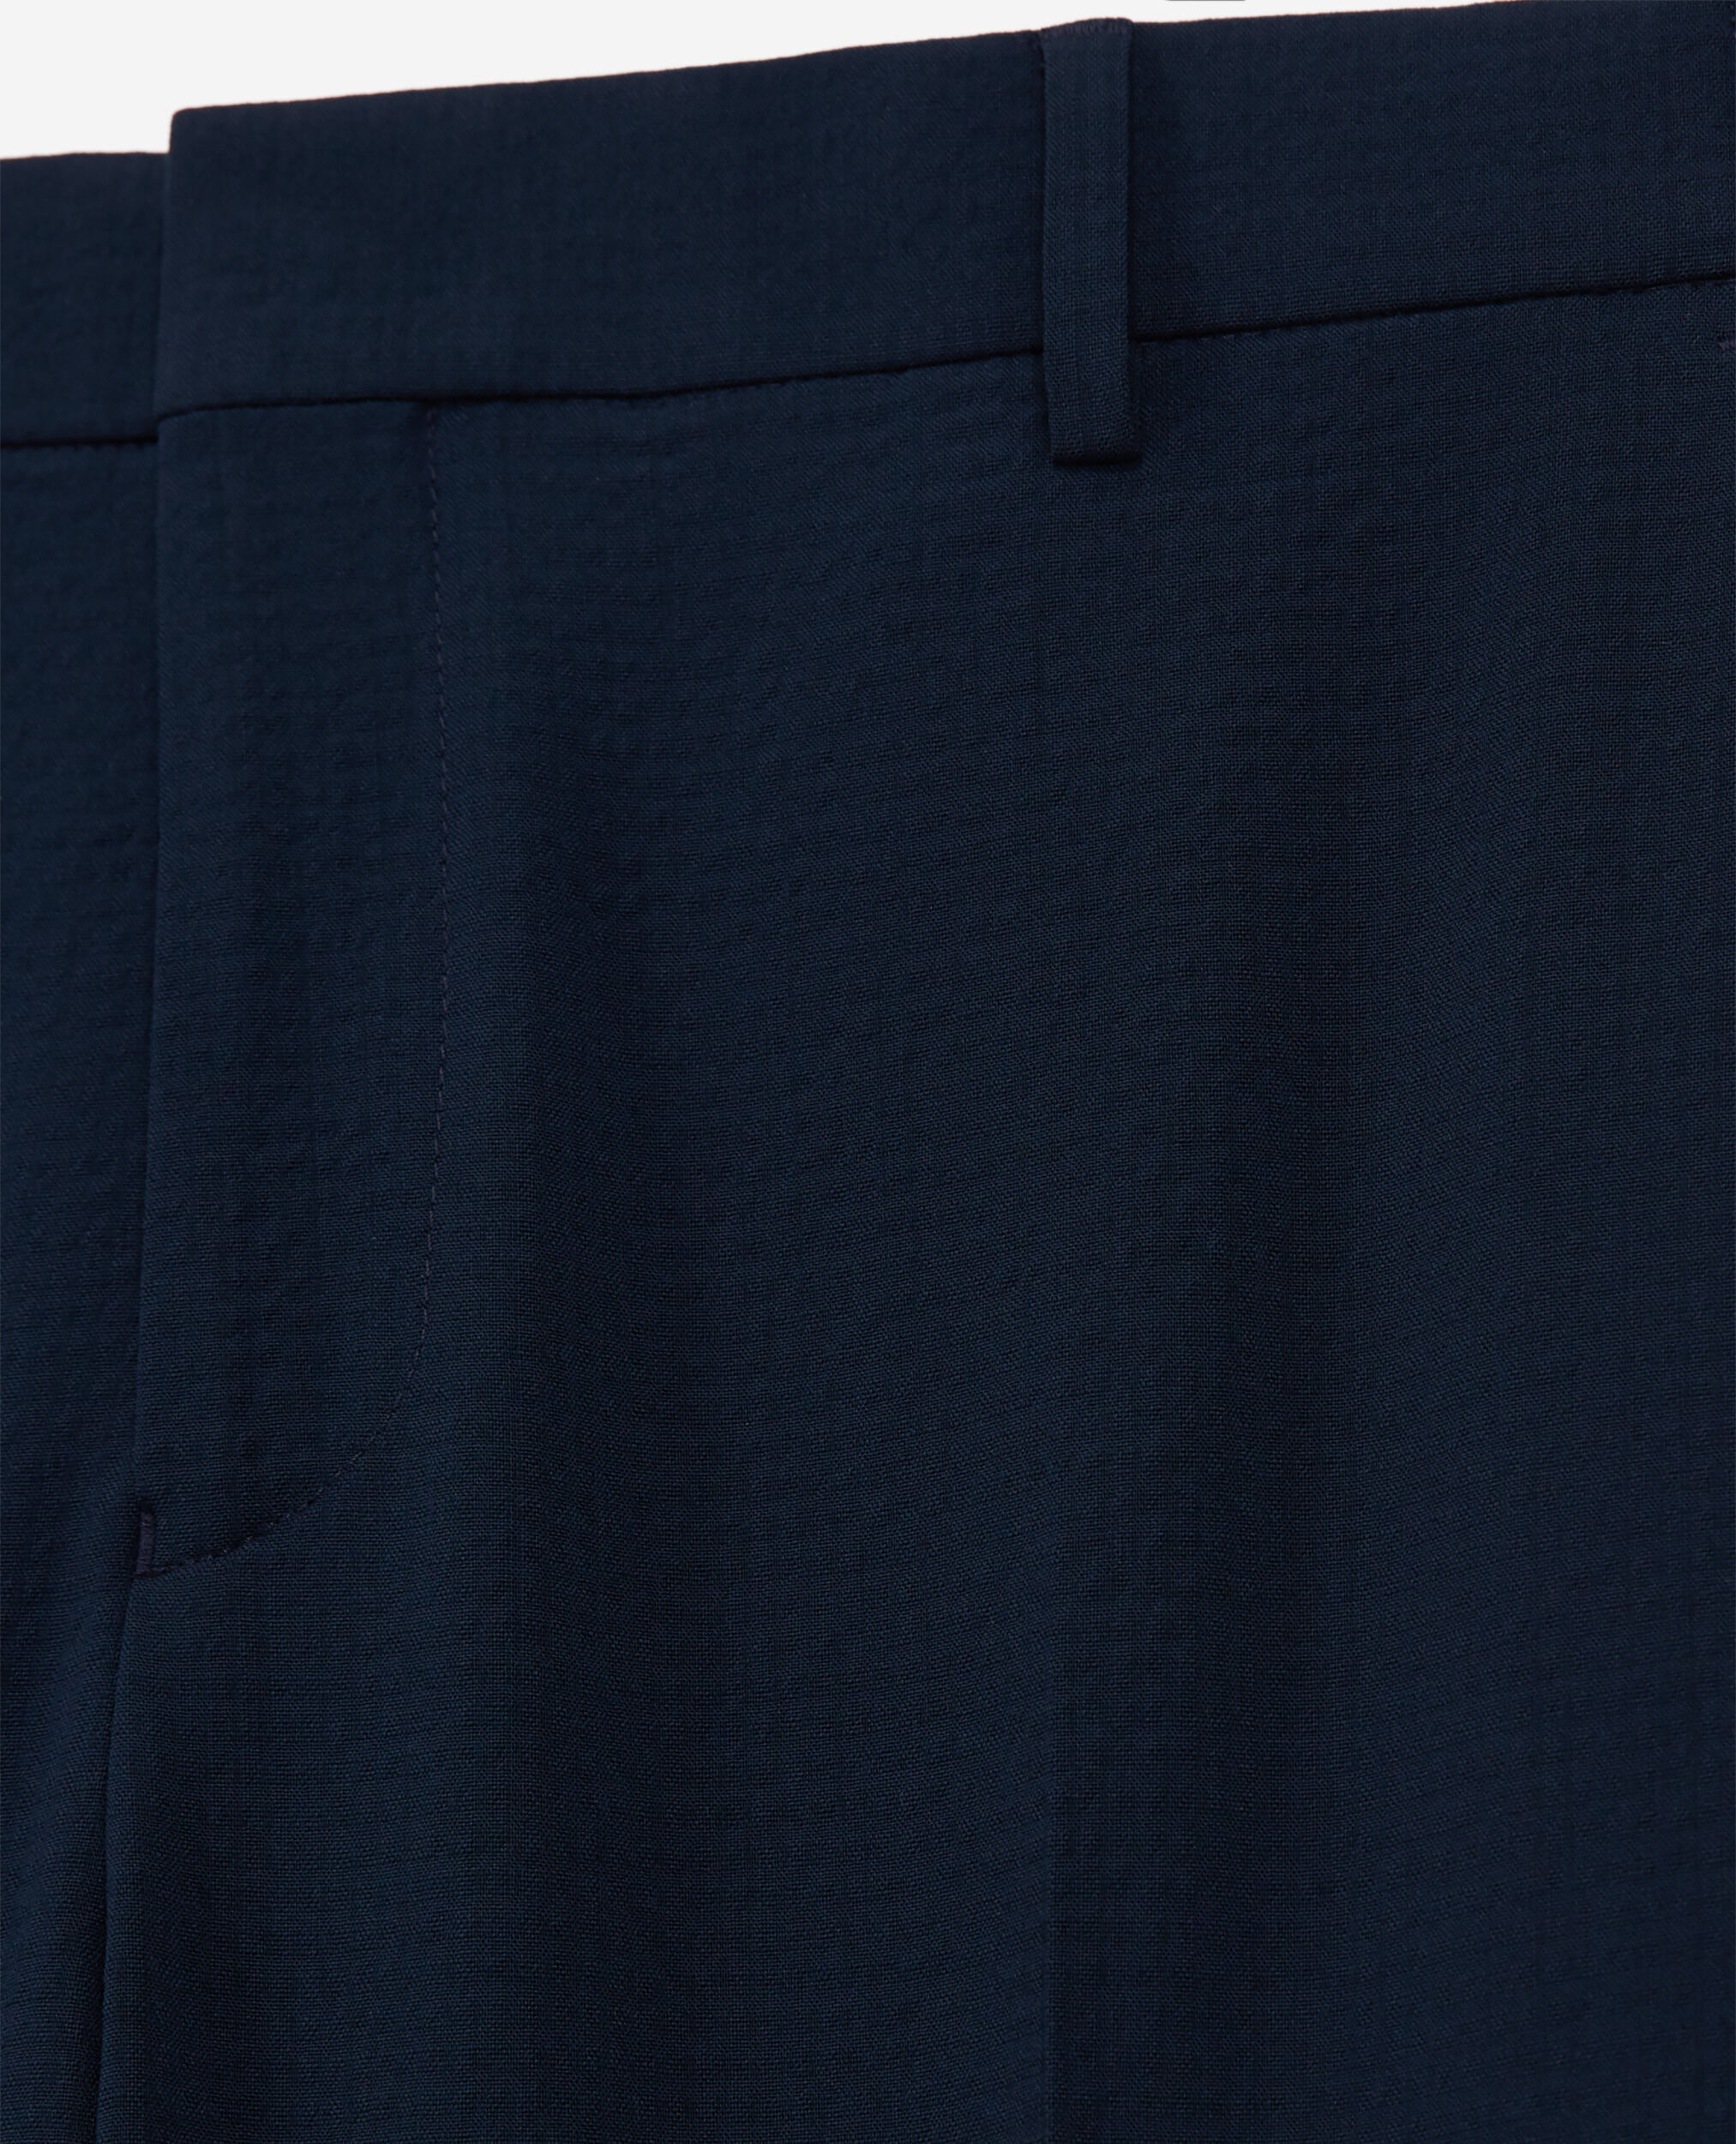 Pantalón traje azul marino lana pliegues, NAVY, hi-res image number null